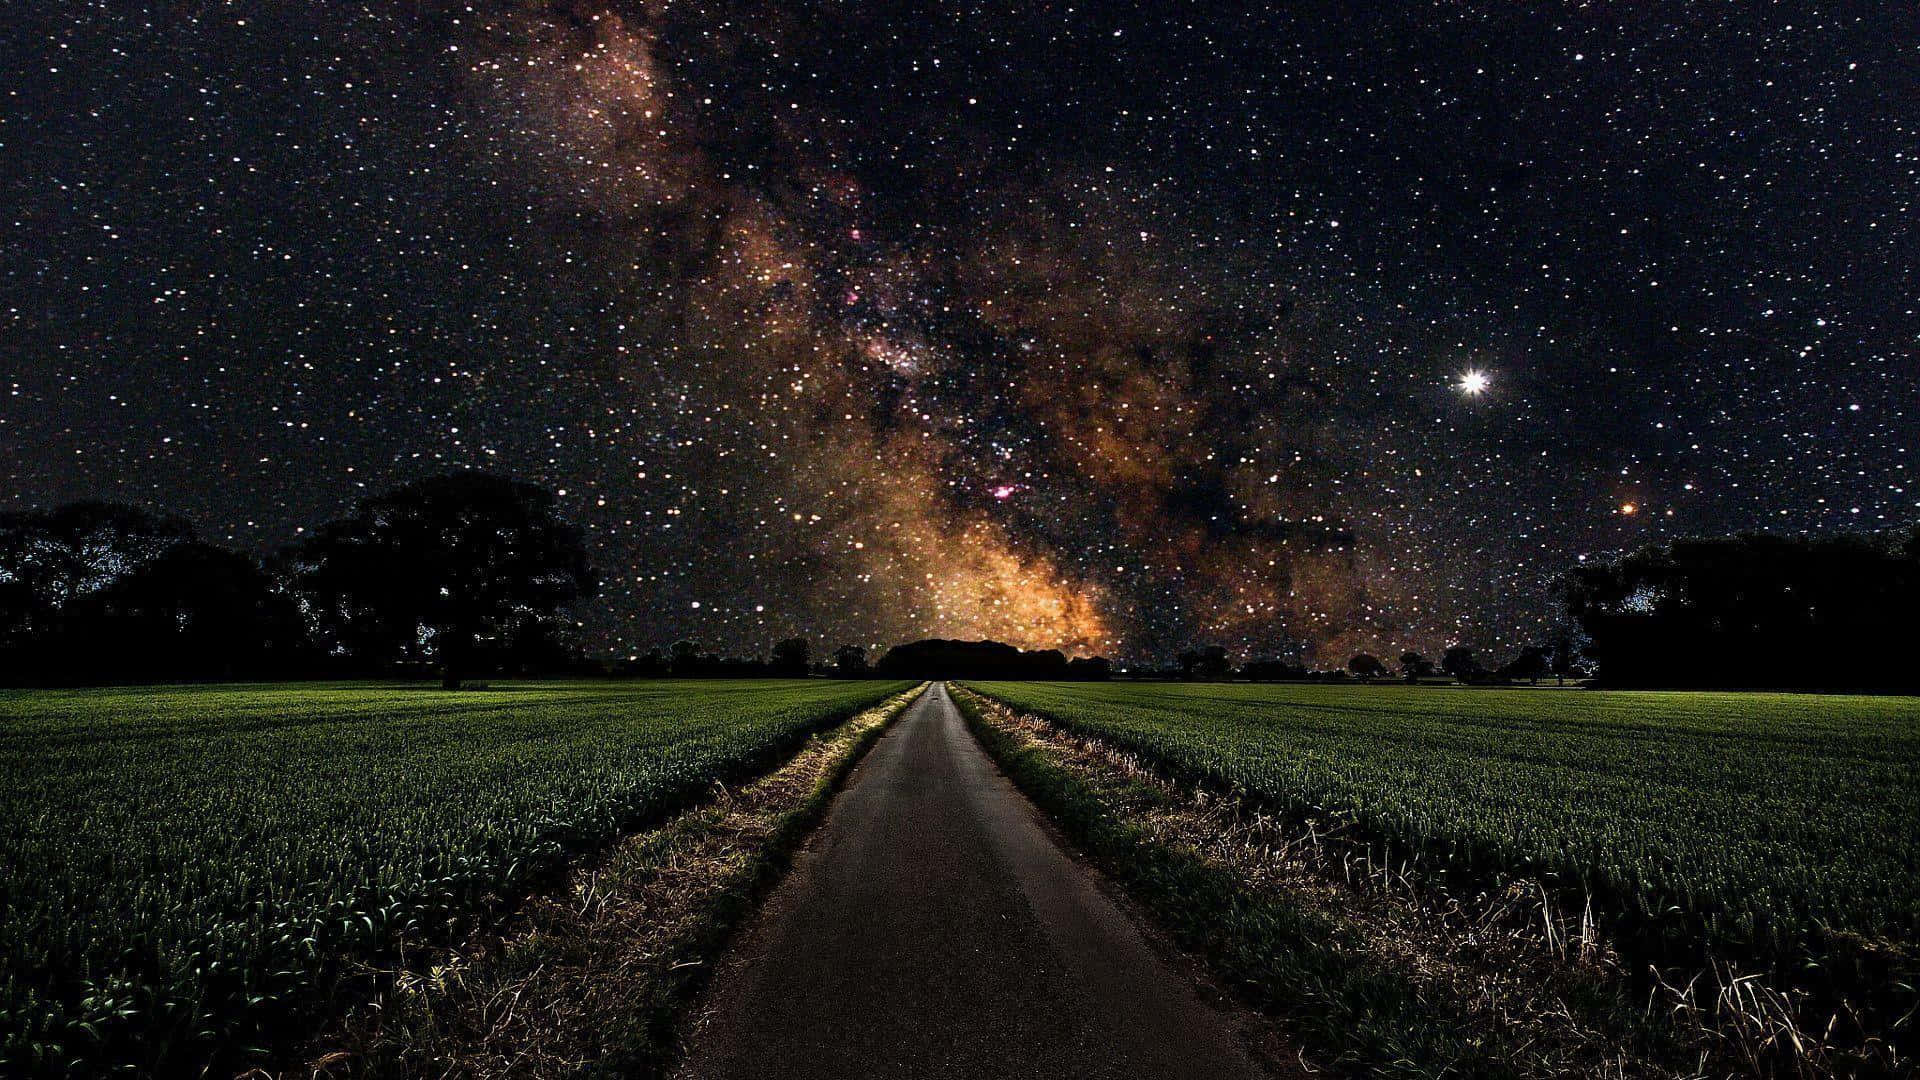 Enjoying the beauty of the Milky Way Galaxy